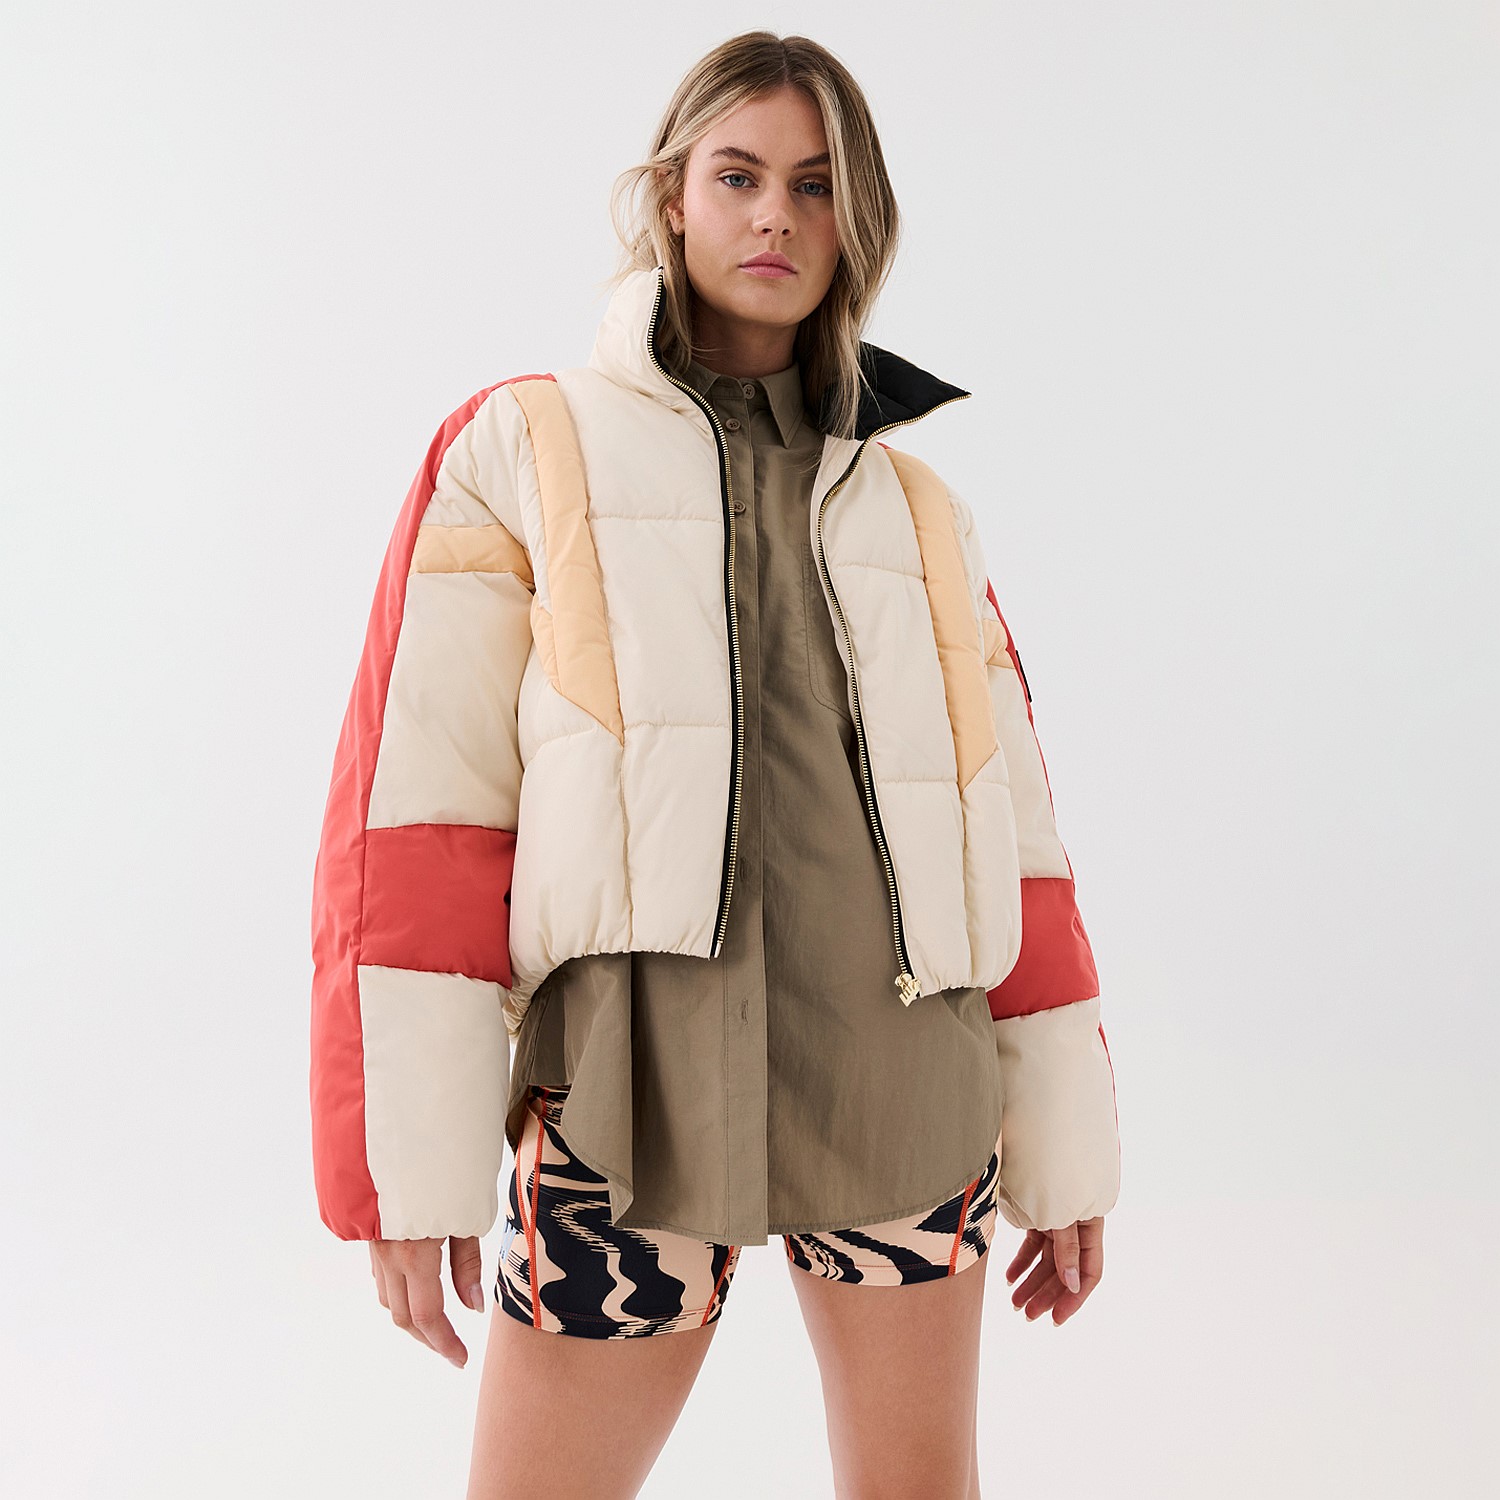 P.E Nation Denizen Jacket | Outer-wear | Stirling Women